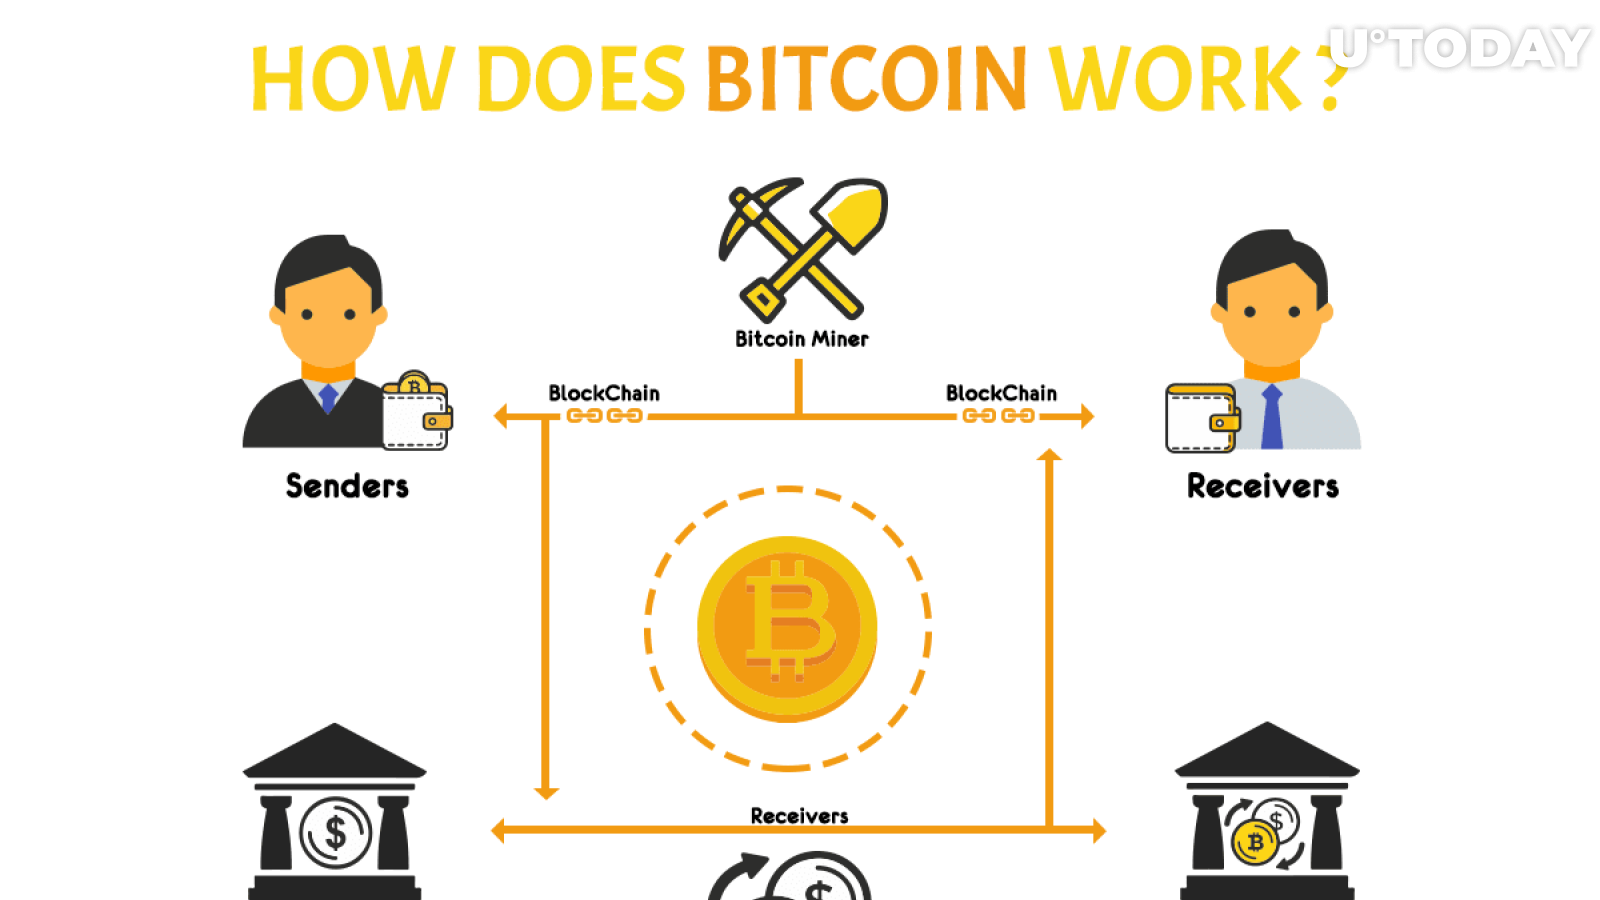 Websites Bi!   tcoin Mining How Do You Make Money Owning Bitcoins - 